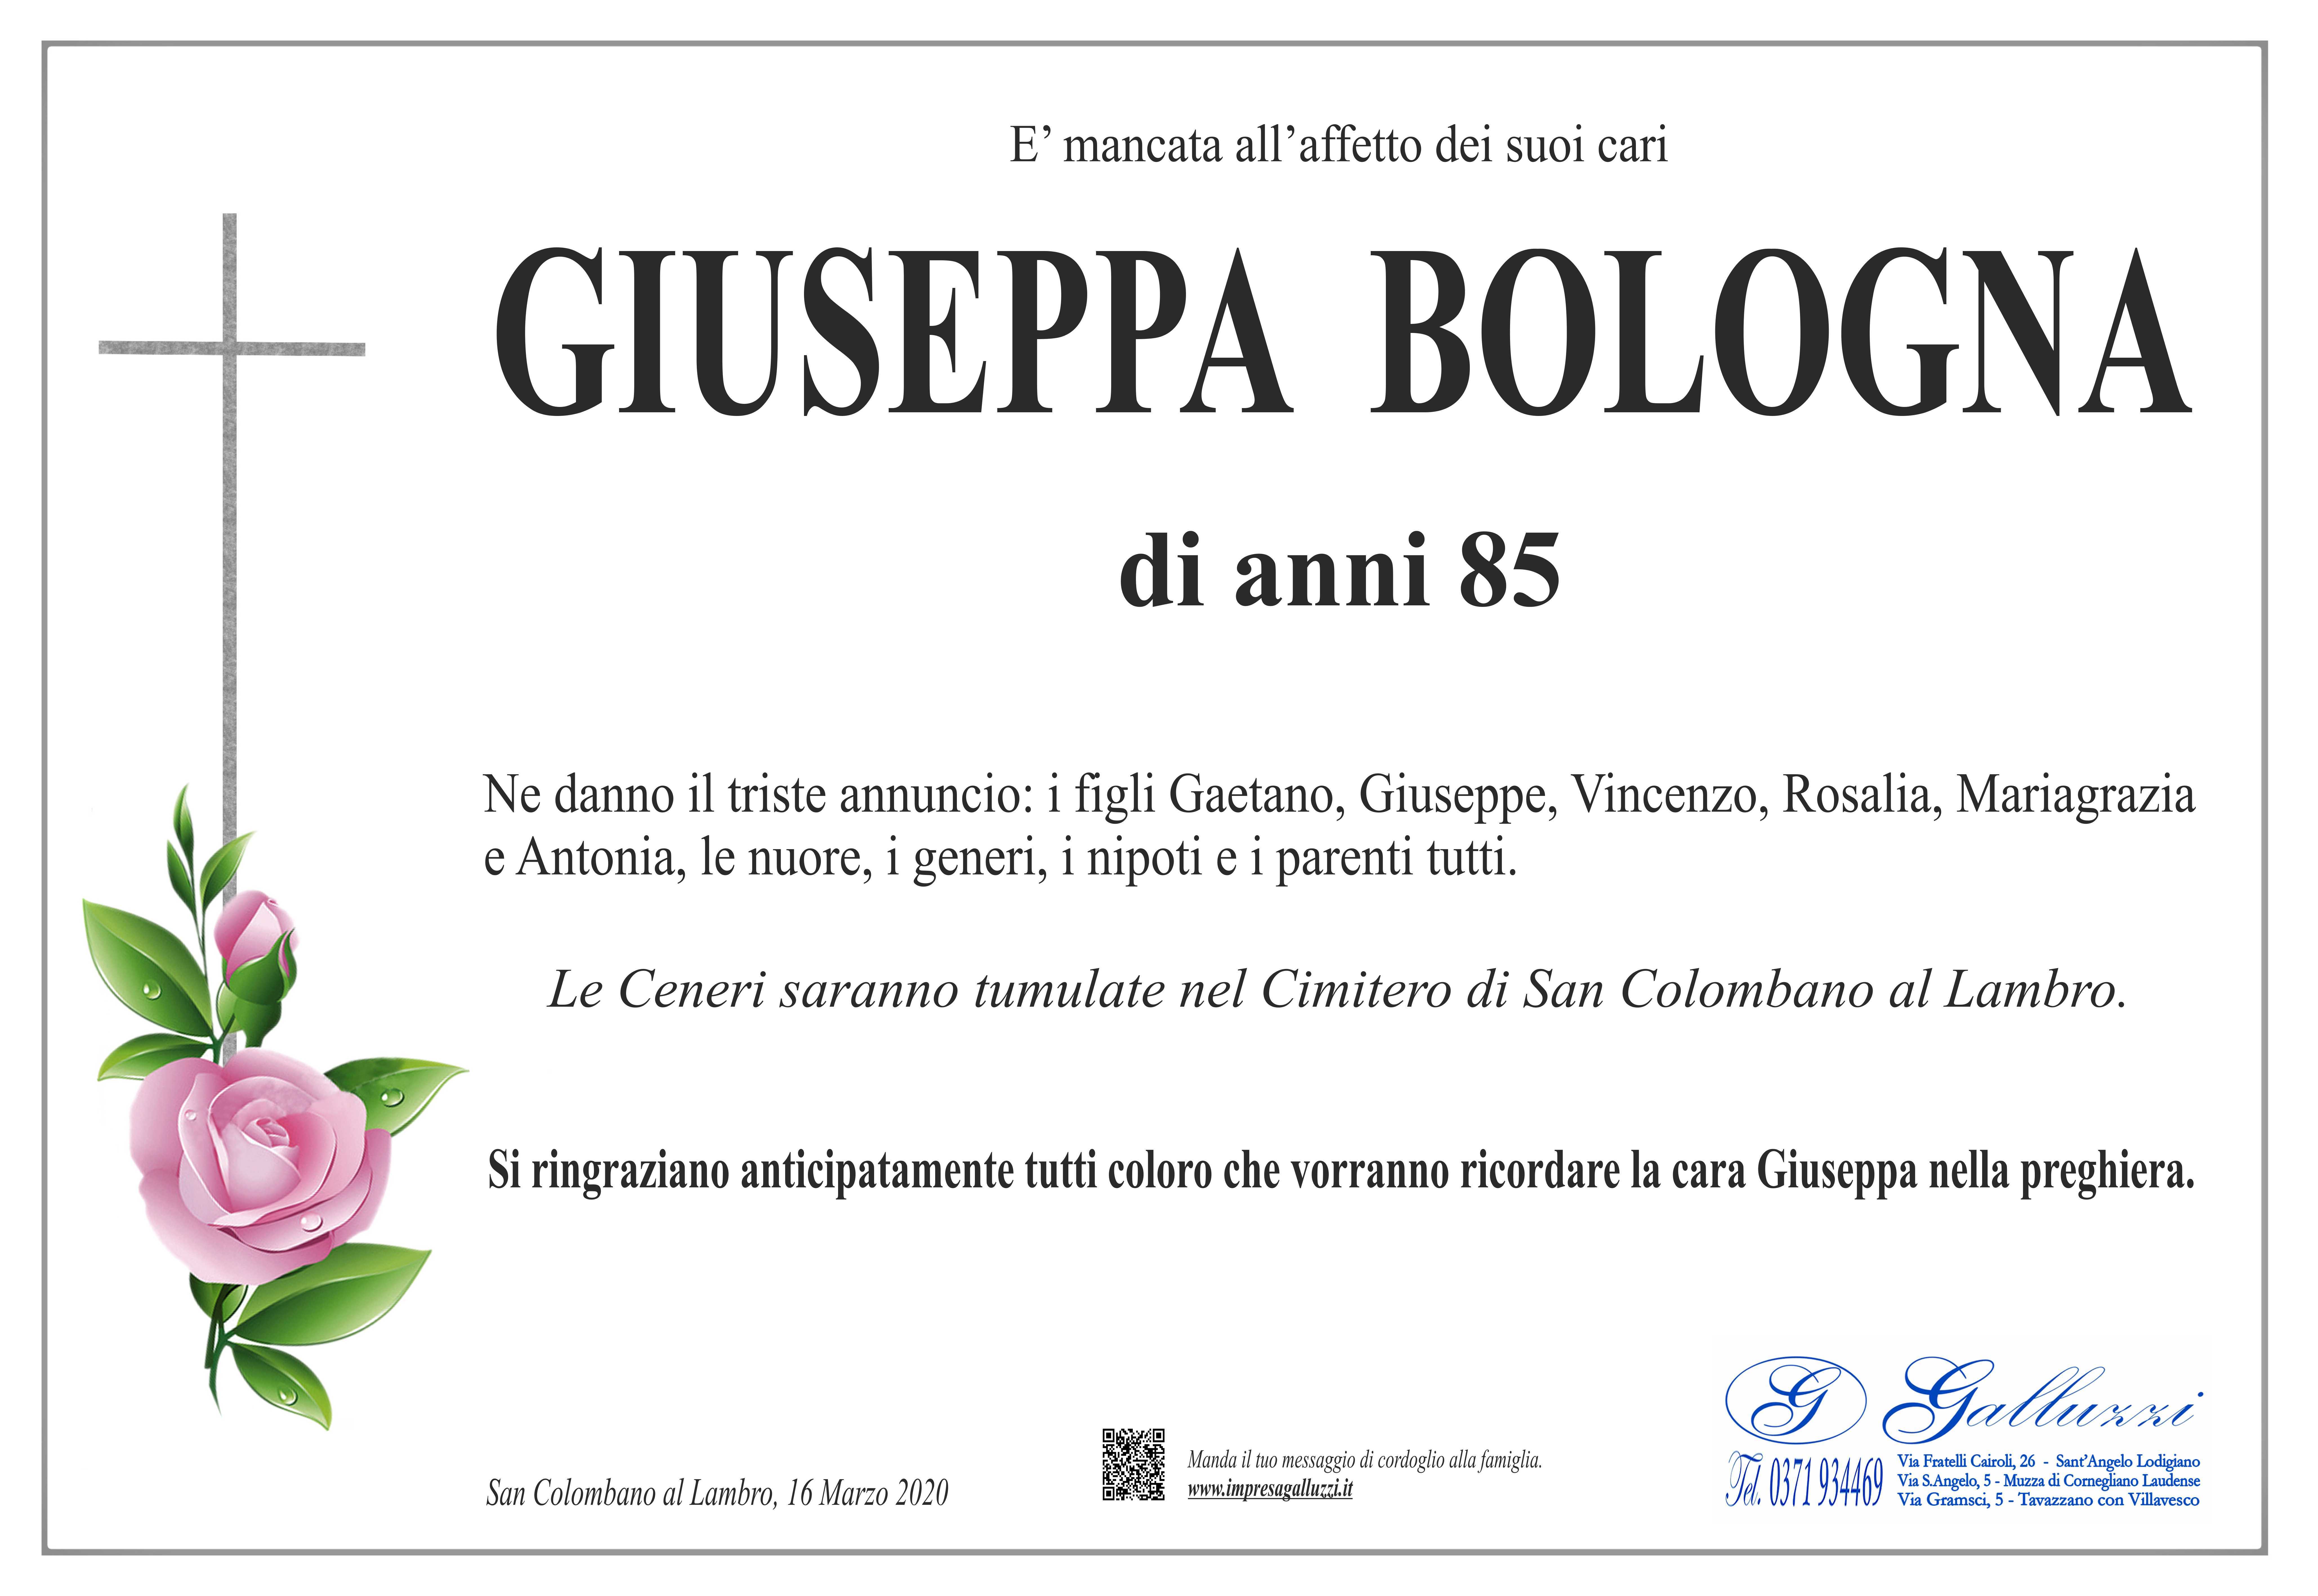 Giuseppa Bologna